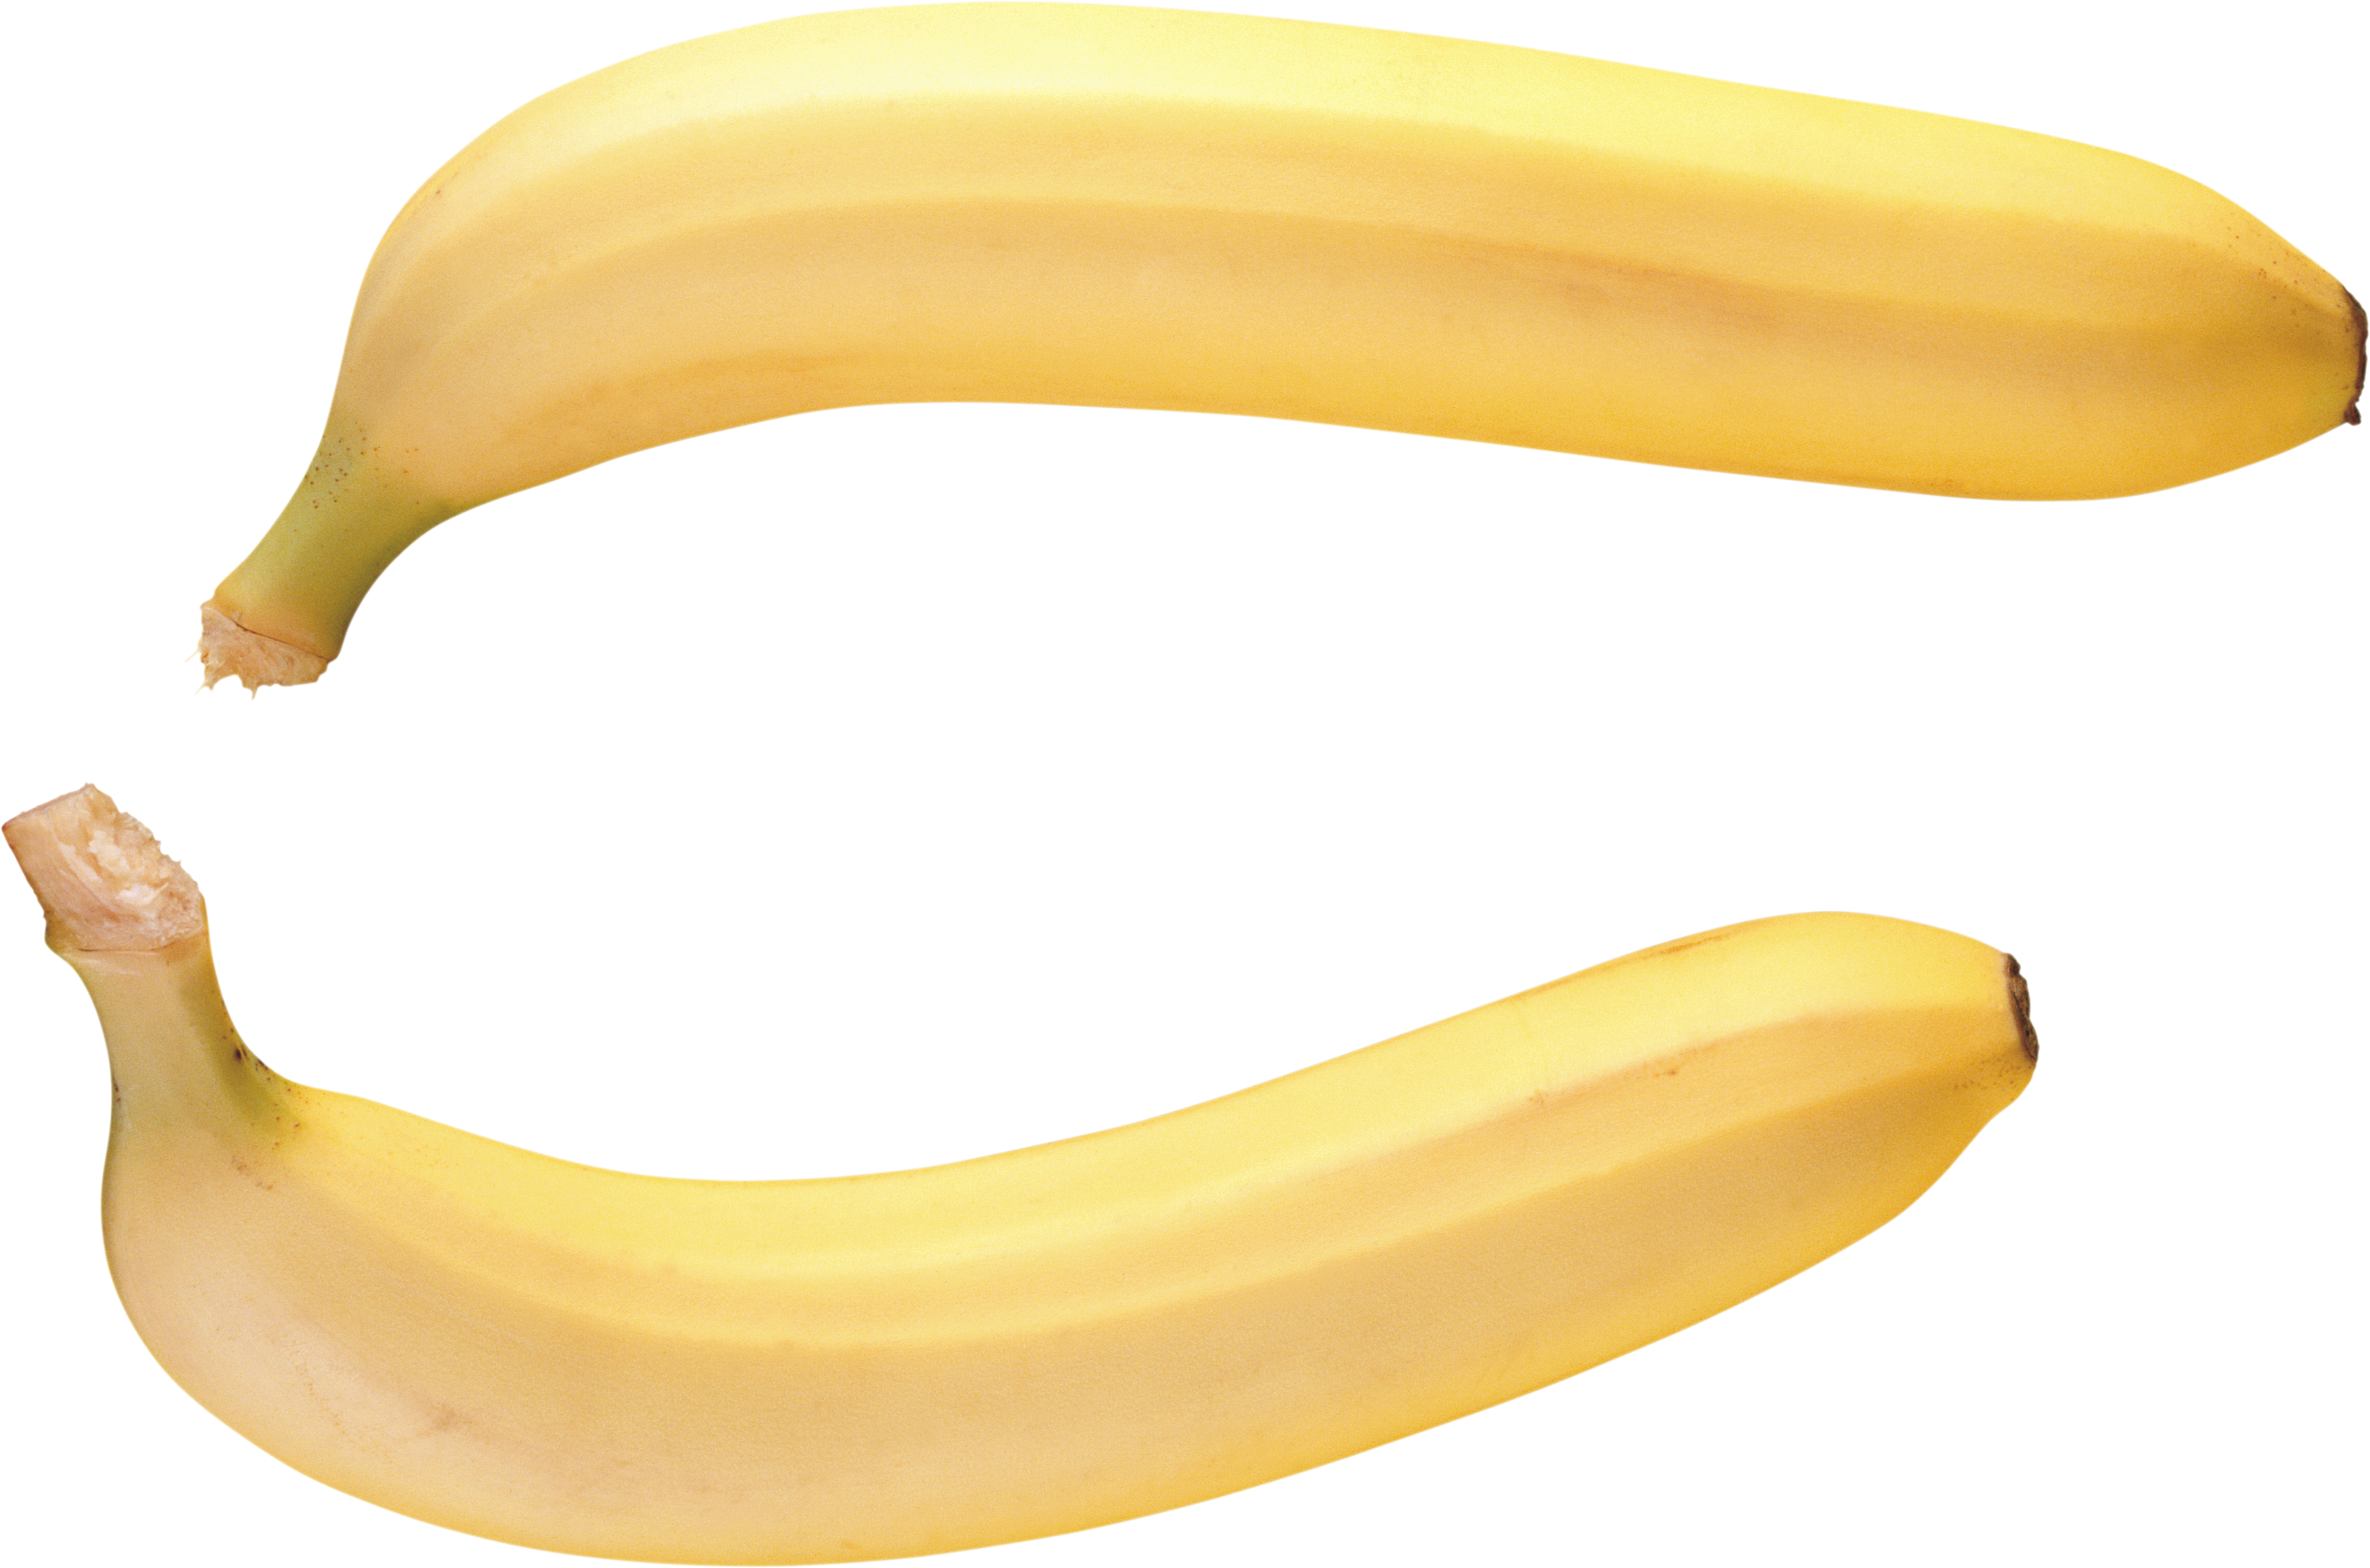 Dwa banany